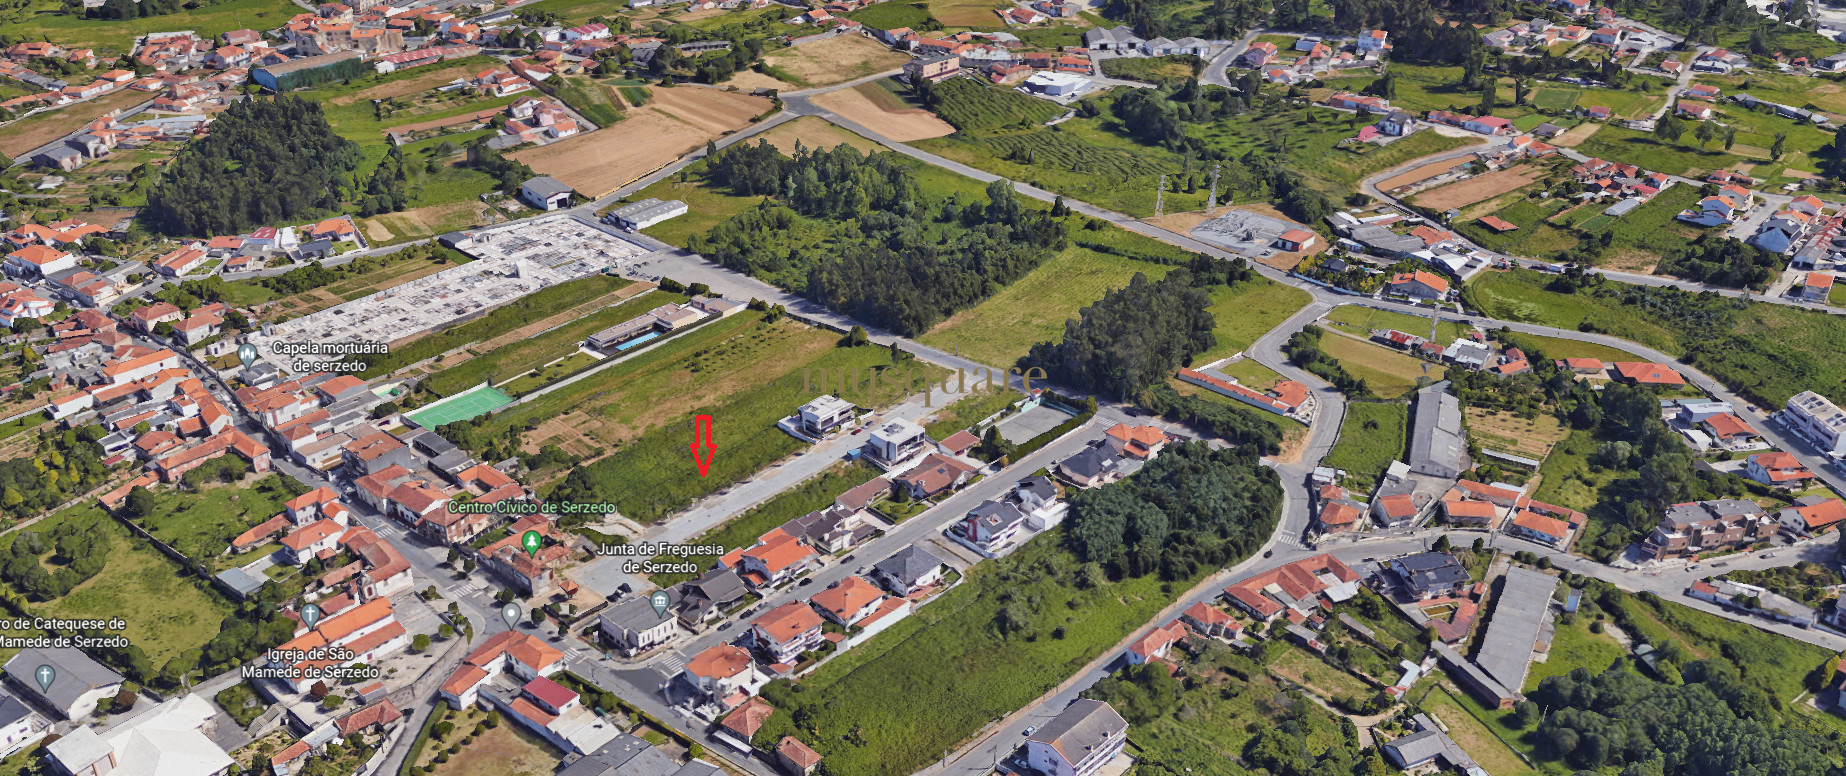 Lots for housing construction, typology t3, Serzedo, Vila Nova de Gaia